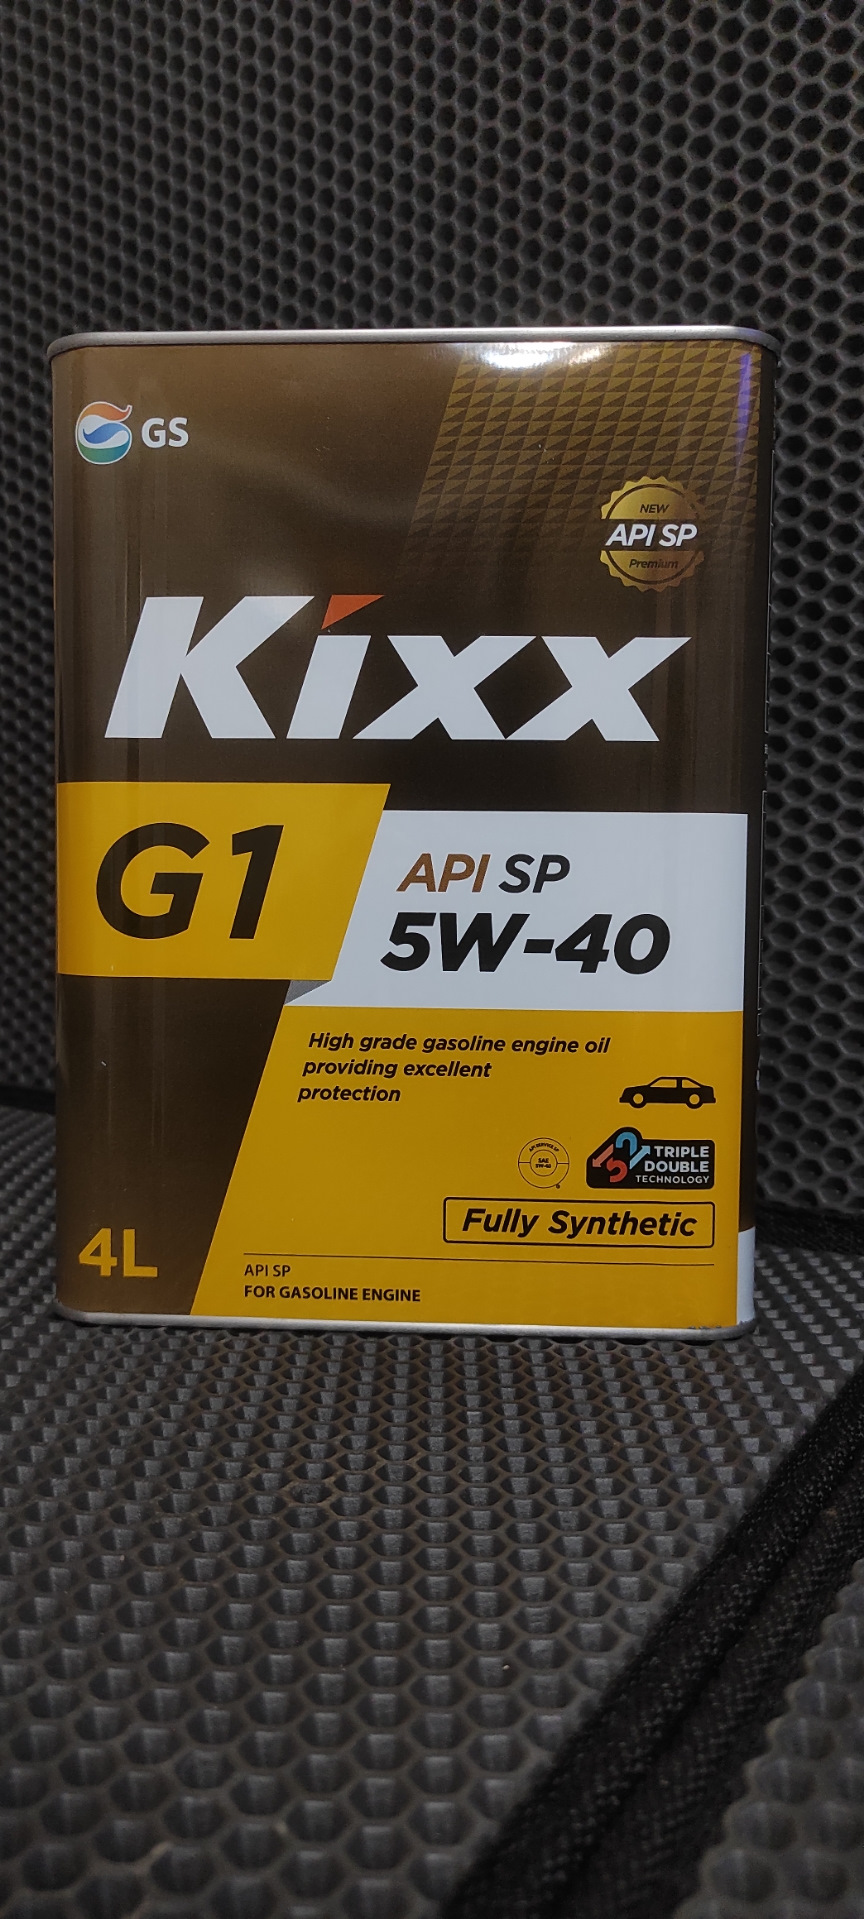 Масло kixx api sp. Kixx g1 SP 5w-40 допуски. Корейское масло Kixx. Драйв масло моторное Kixx g1 SP 5w-40. Корейское масло для авто в железной банке.